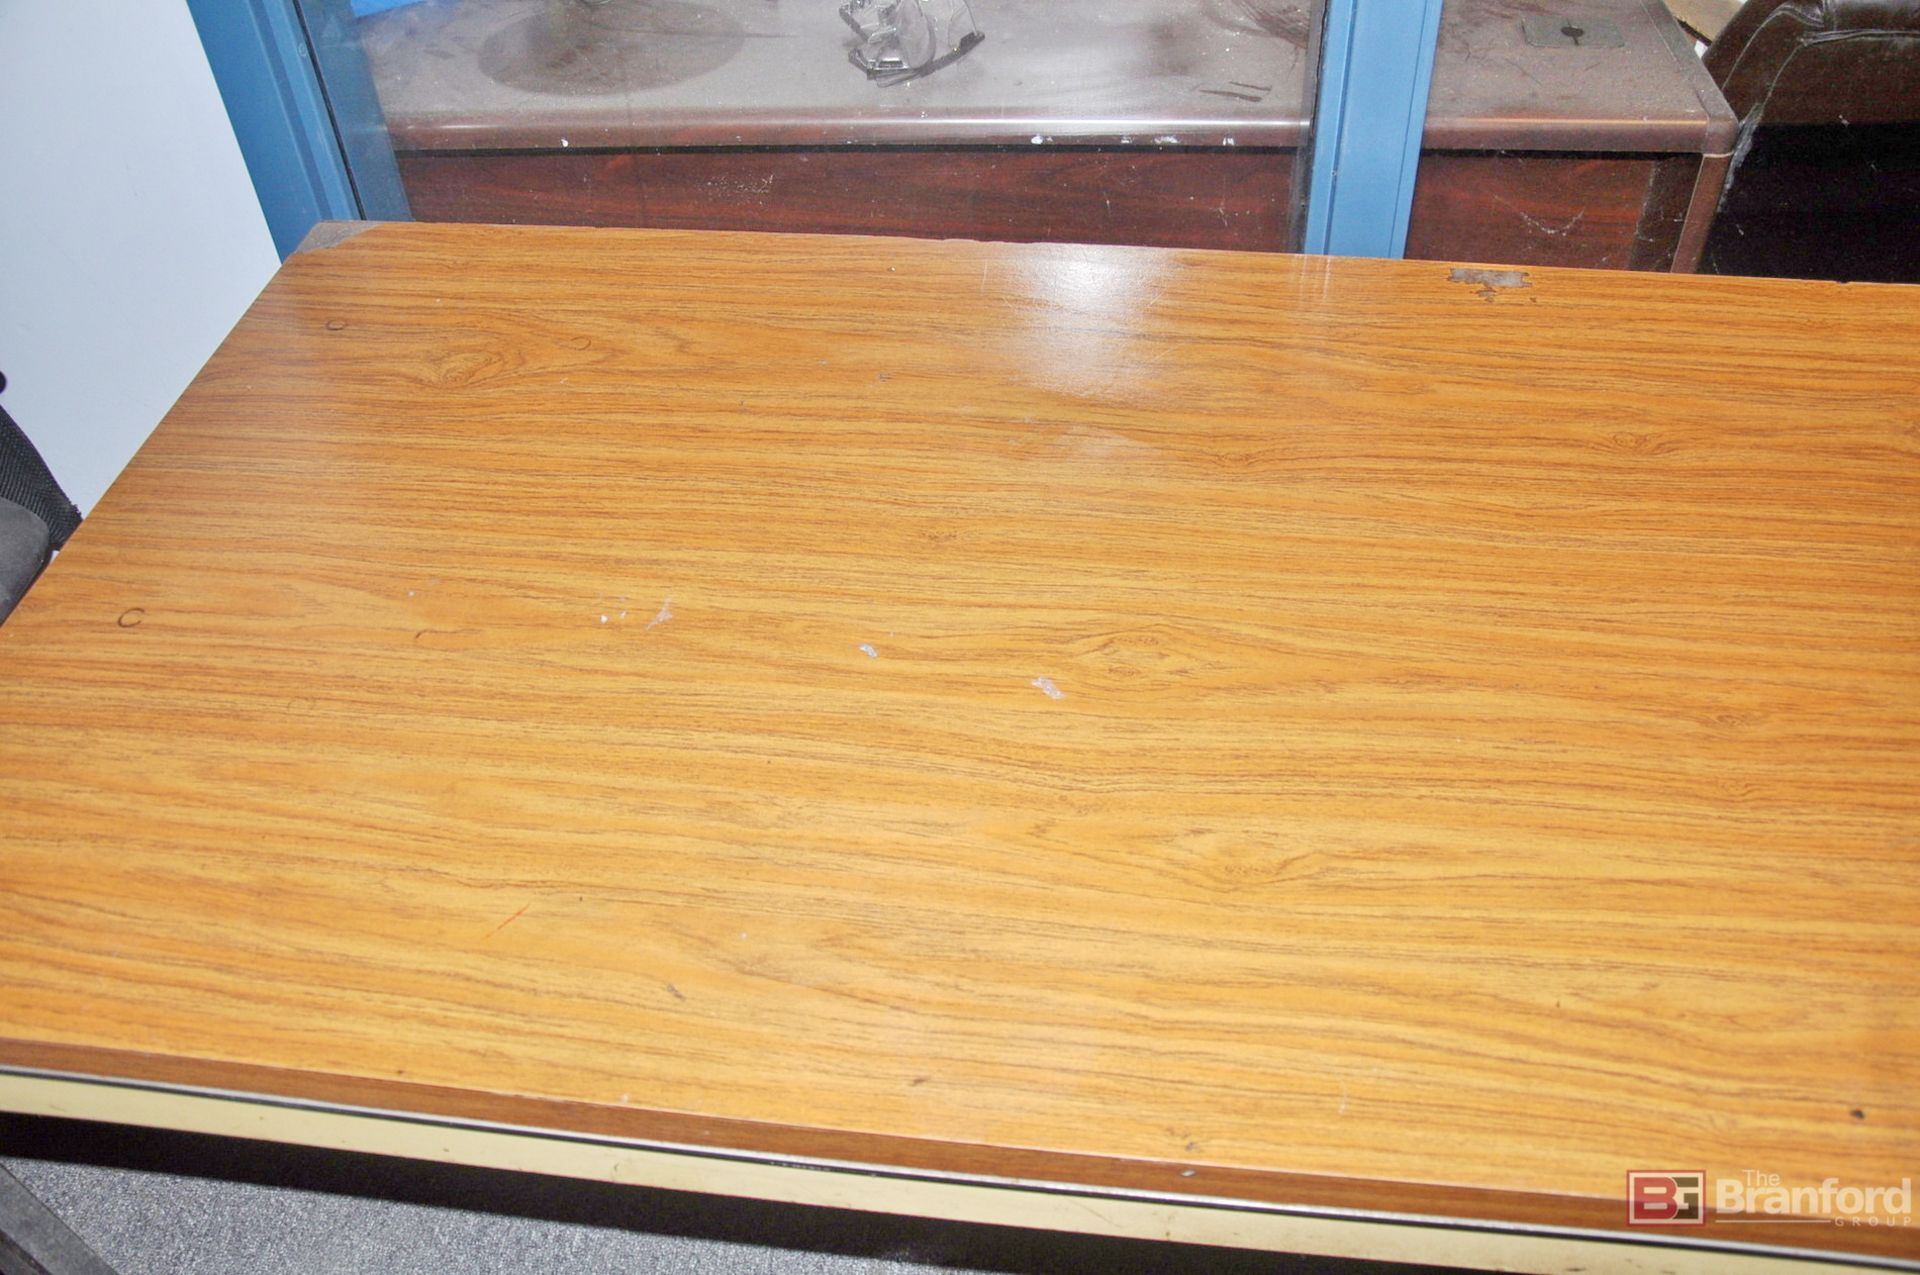 70" X 30" X 30" wood grain table - Image 5 of 5